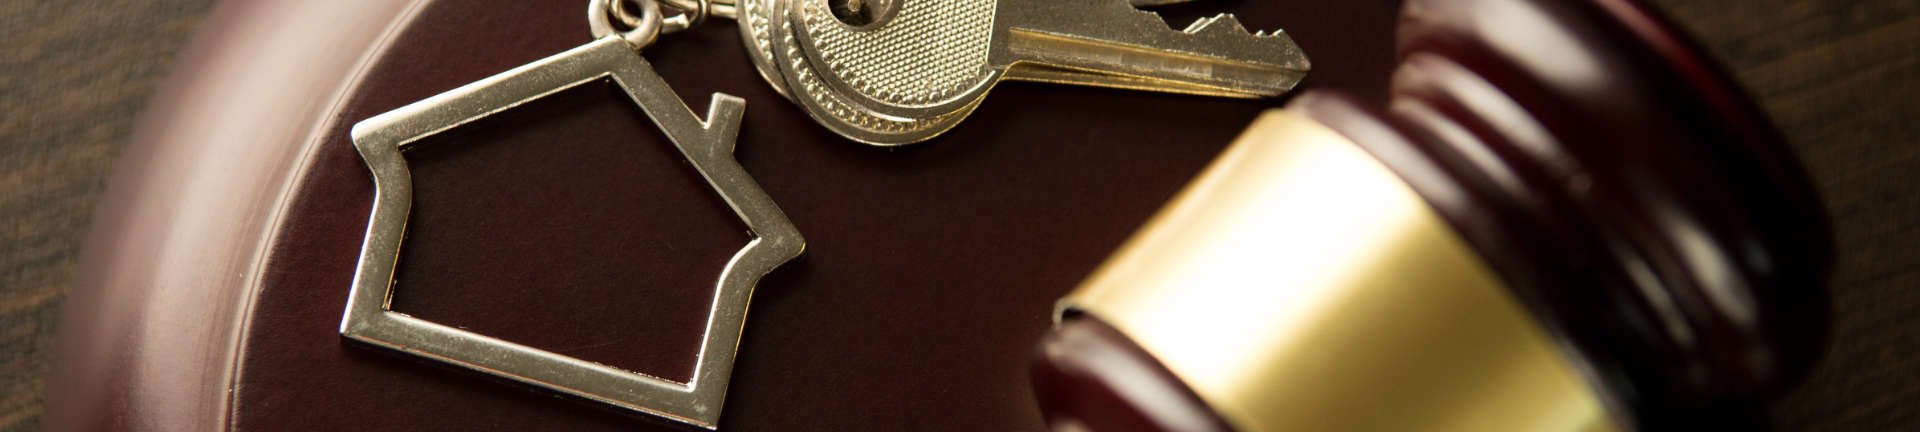 house keys and judge's gavel